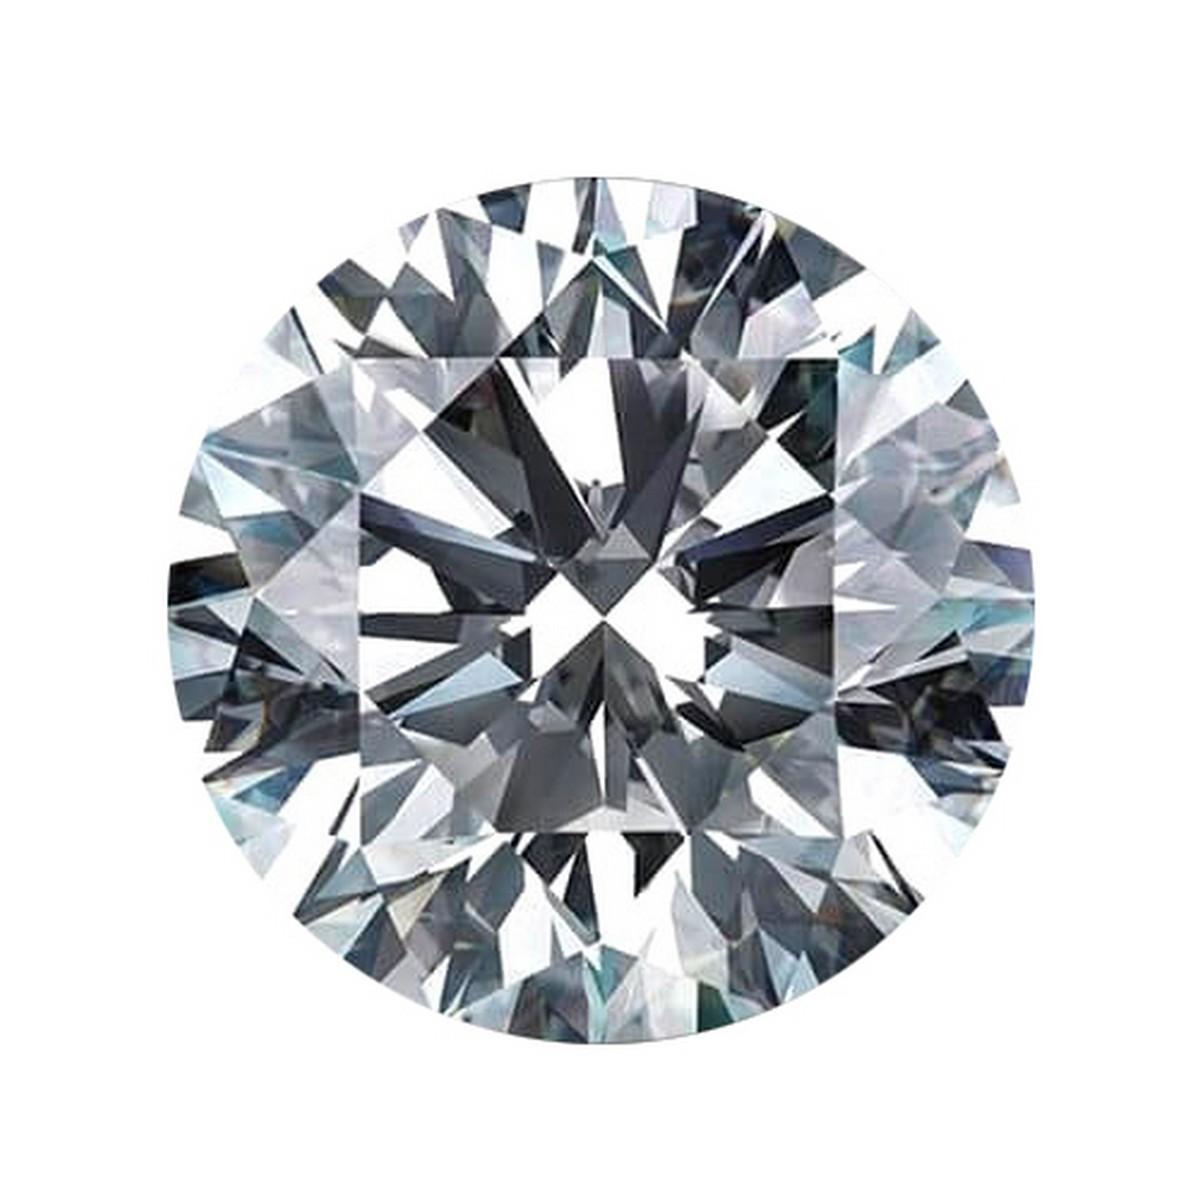 2.61 ctw. VVS2 IGI Certified Round Cut Loose Diamond (LAB GROWN)